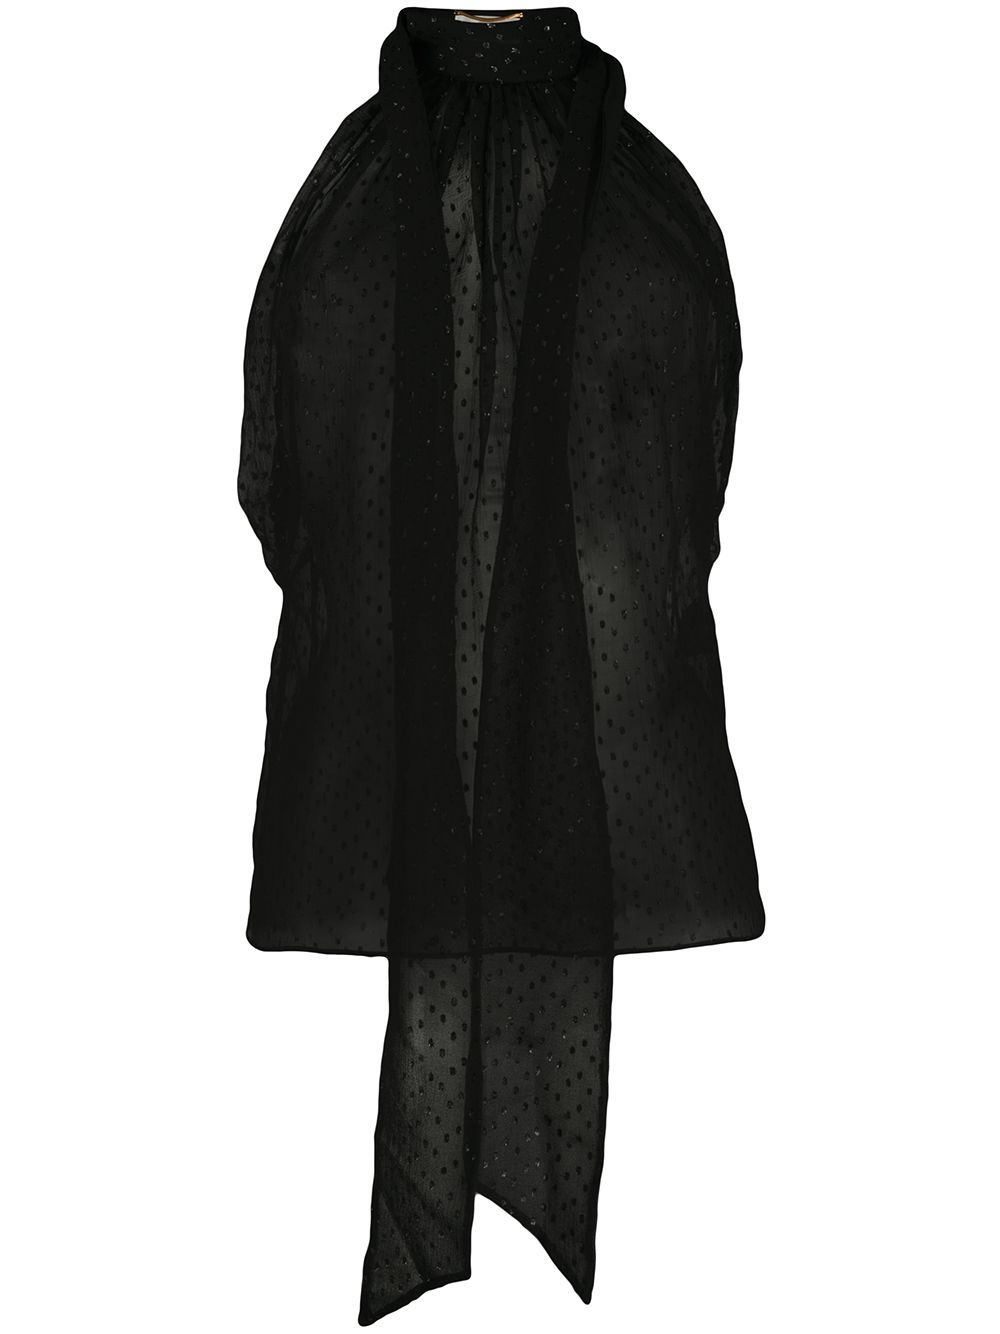 Shop black Saint Laurent glitter polka dot blouse with Express Delivery ...